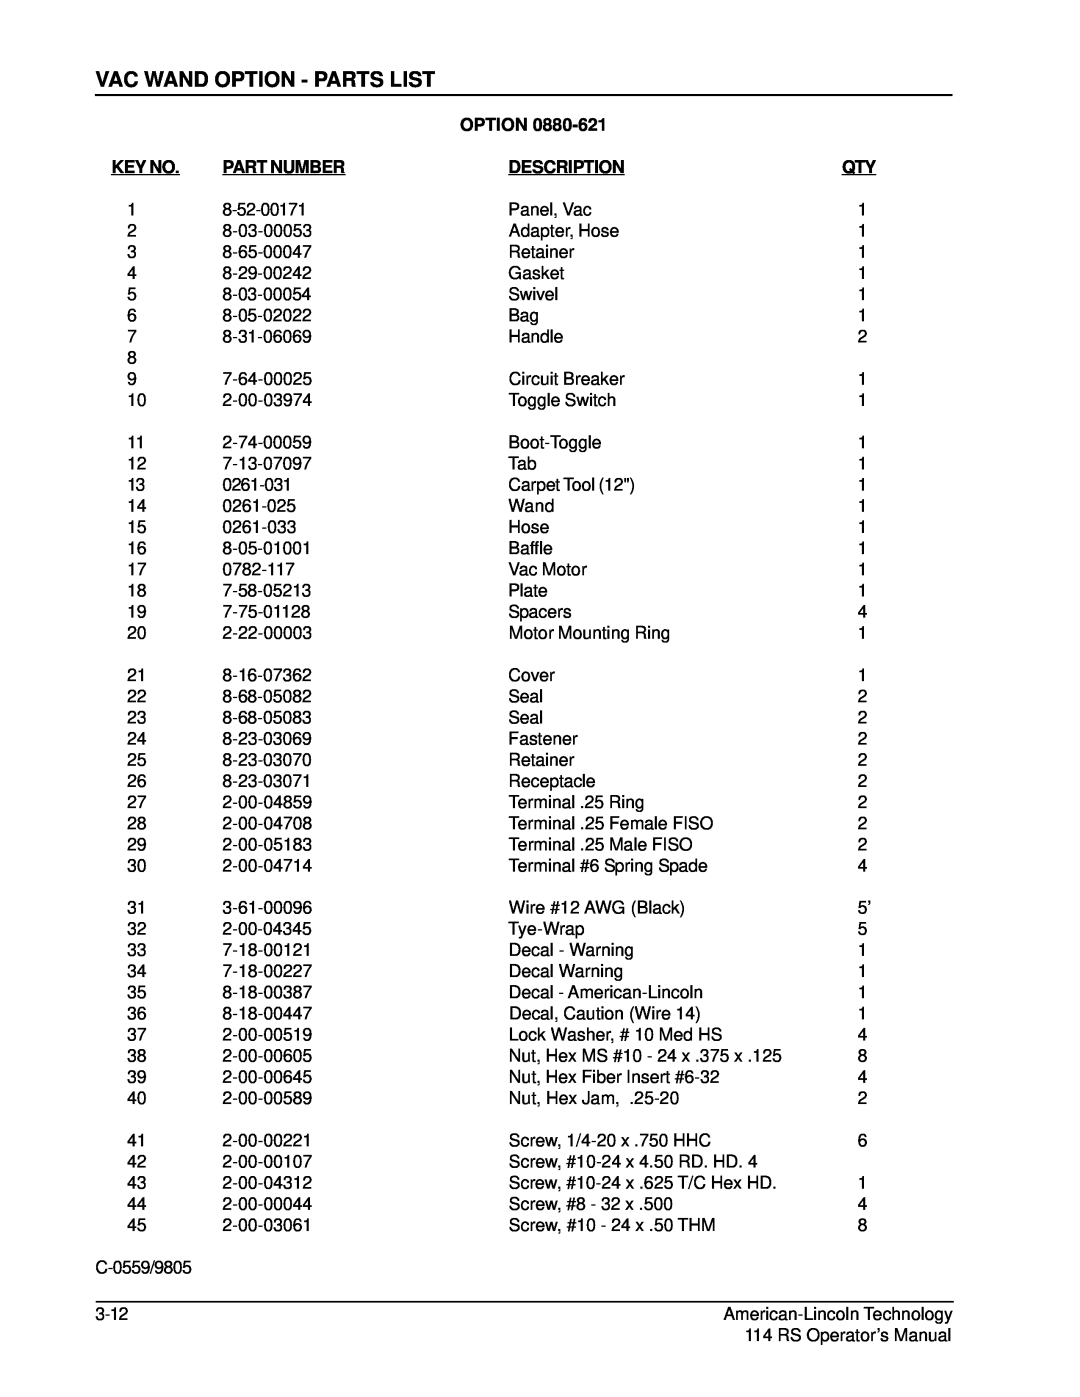 Nilfisk-ALTO 114RS SWEEPER manual Vac Wand Option - Parts List, Part Number, Description 